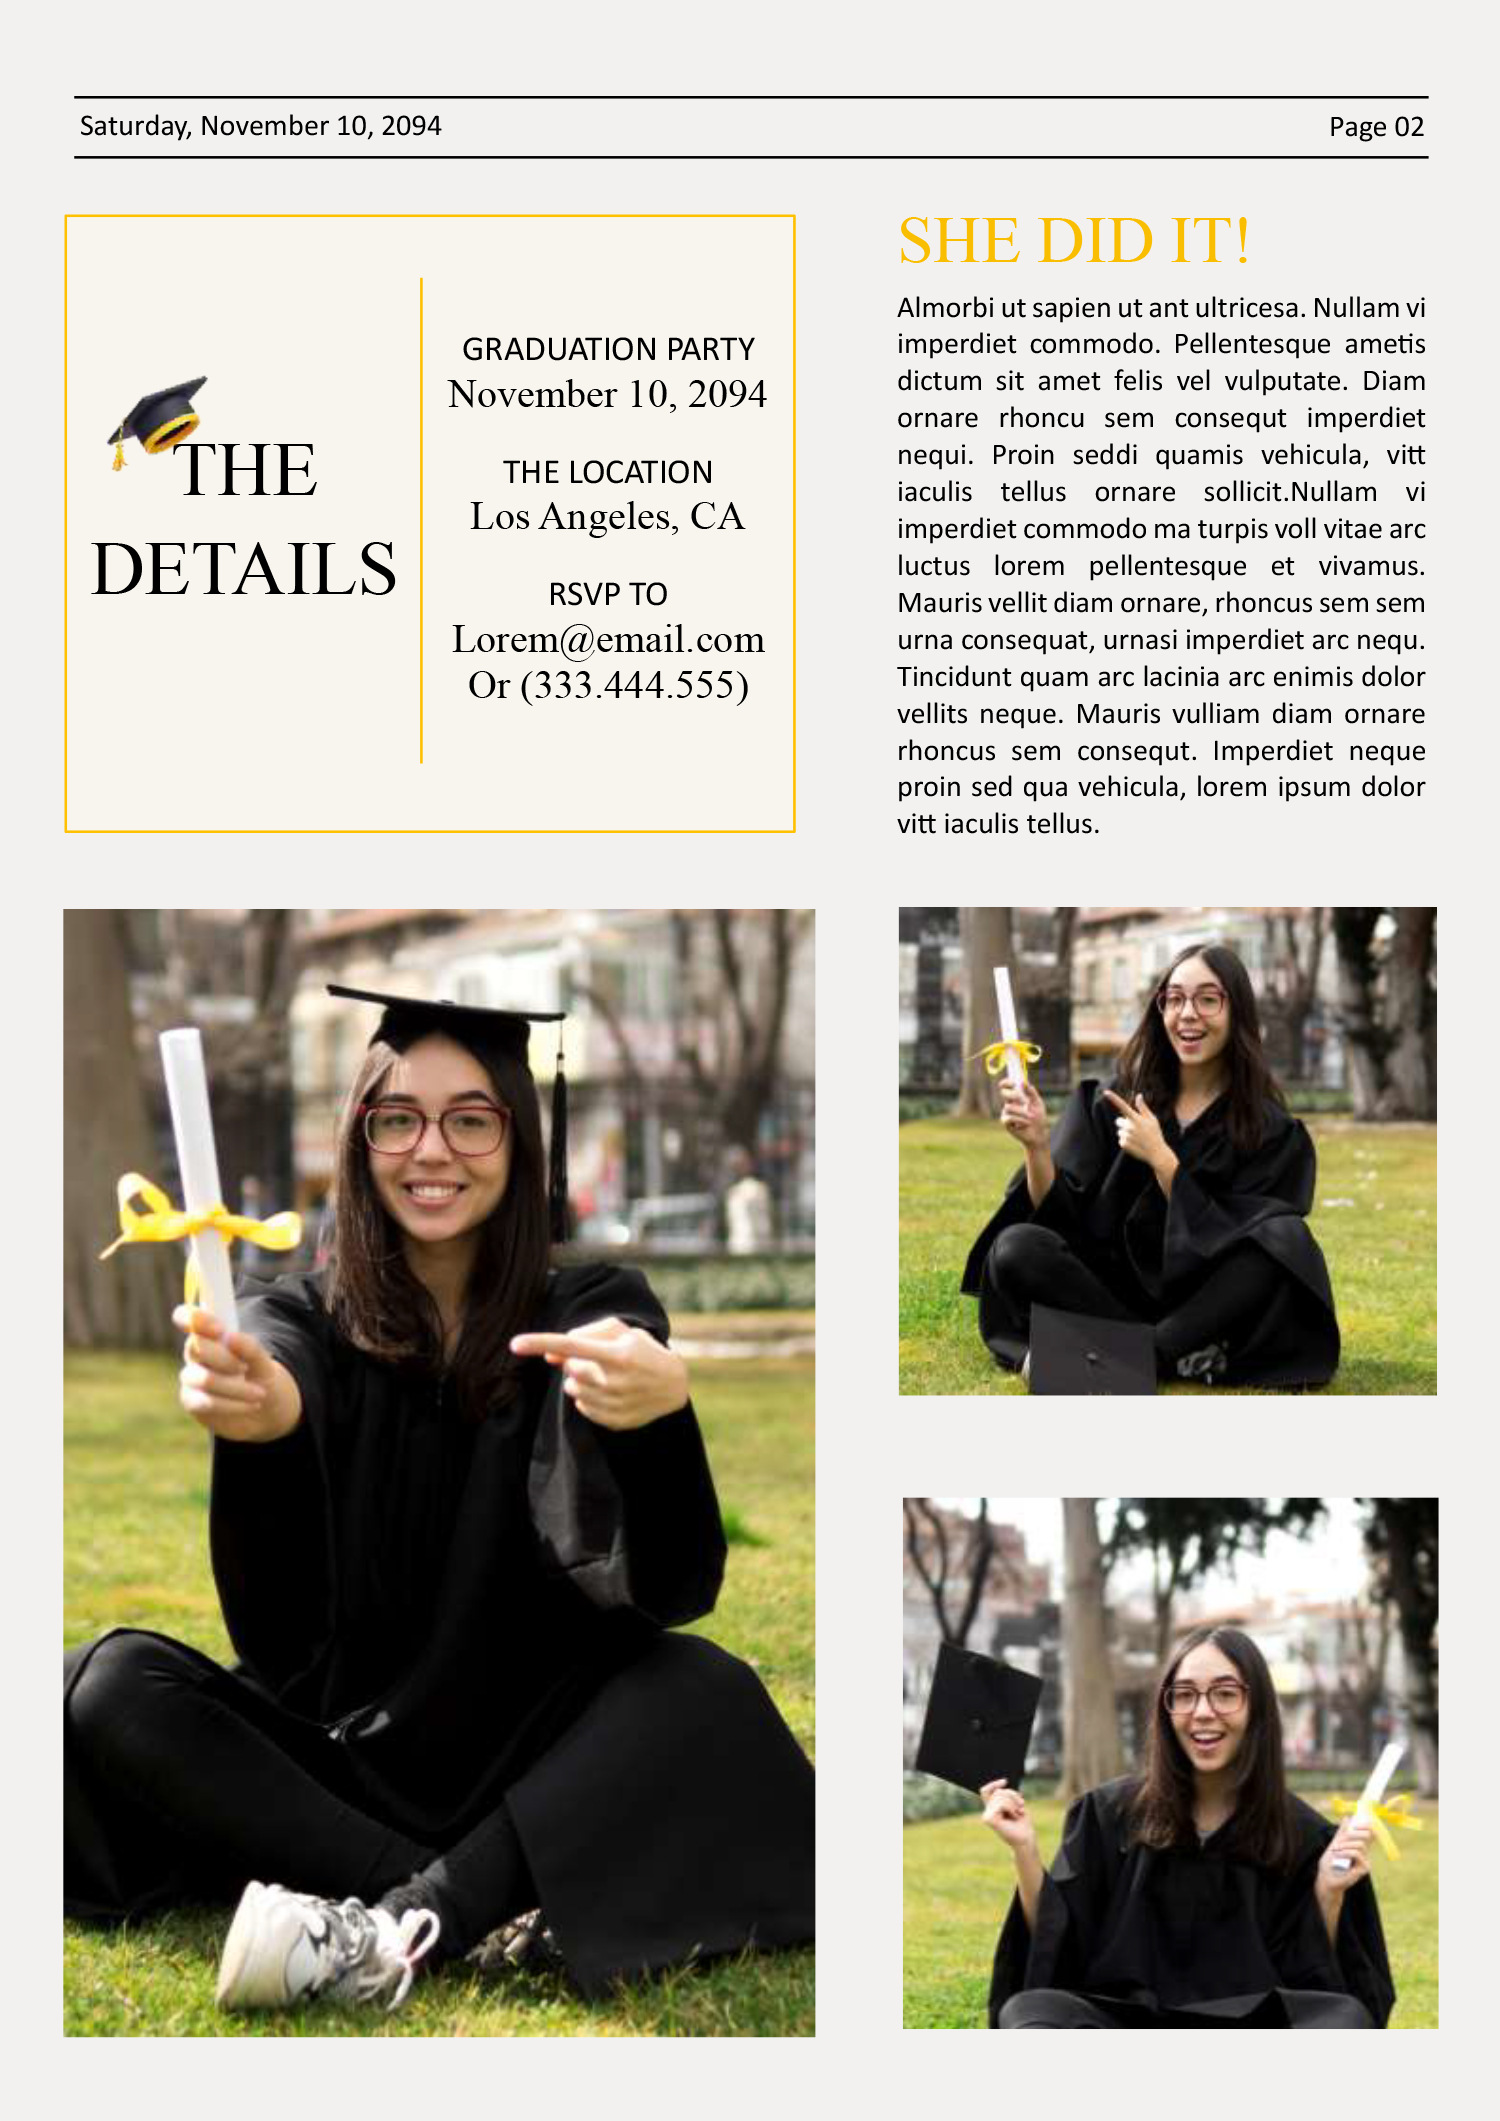 Yellow Graduation Newspaper Template - Page 02